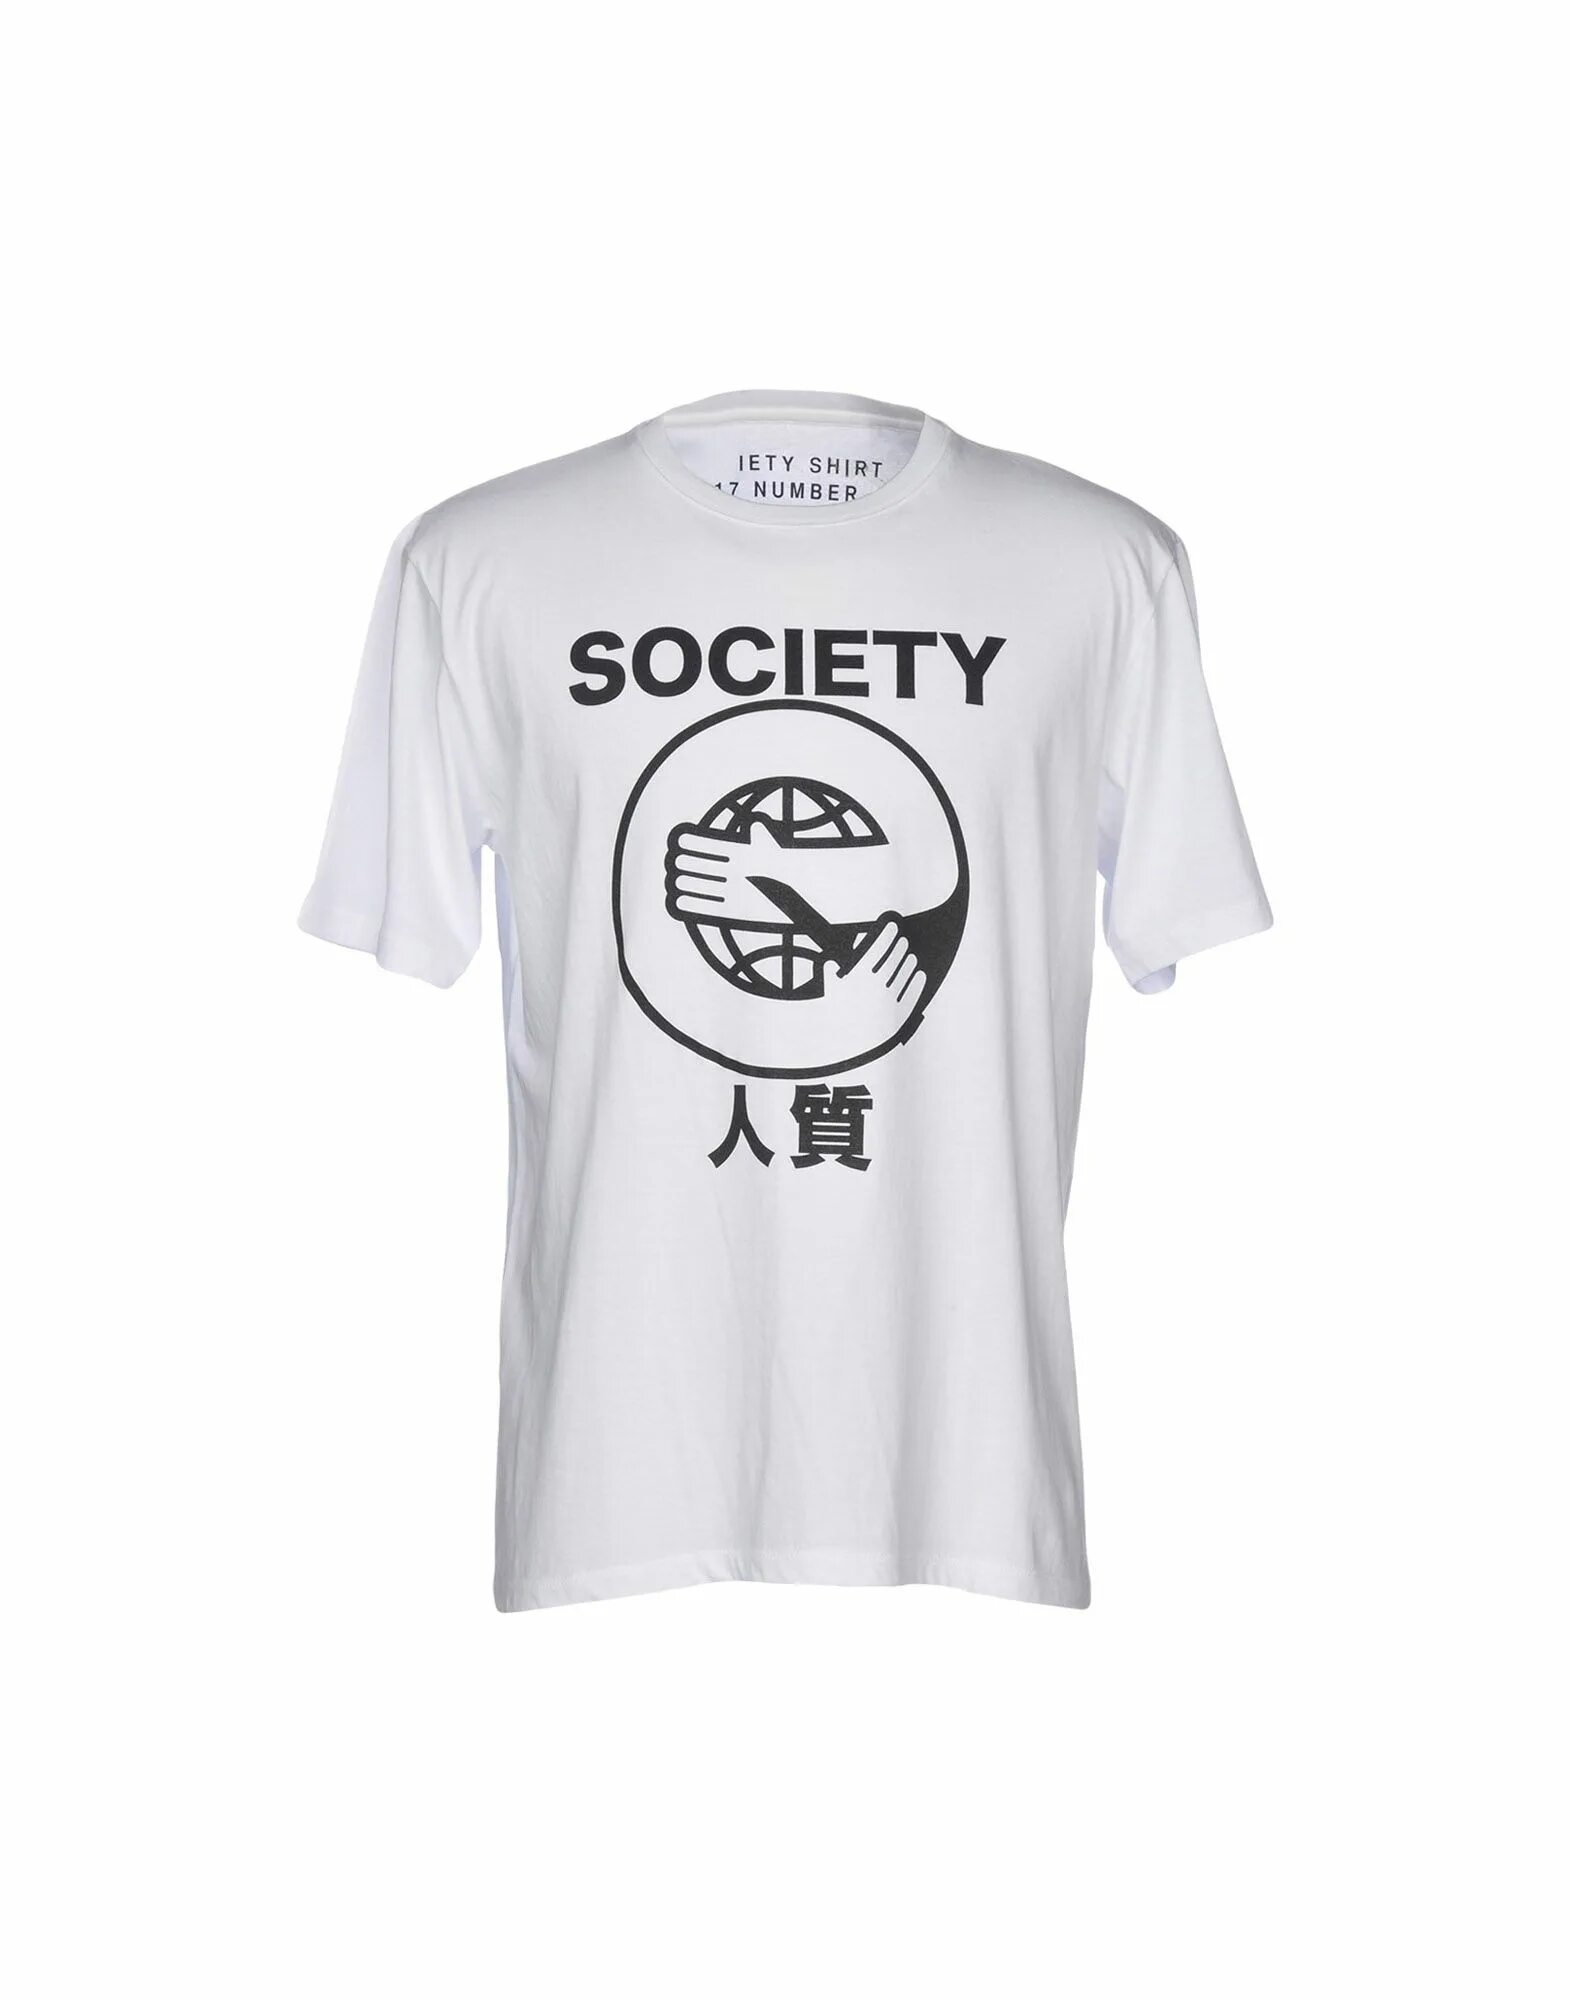 Society одежда. Just Cavalli футболка мужская. Pothead Society футболка. Kaotiko Society футболка.